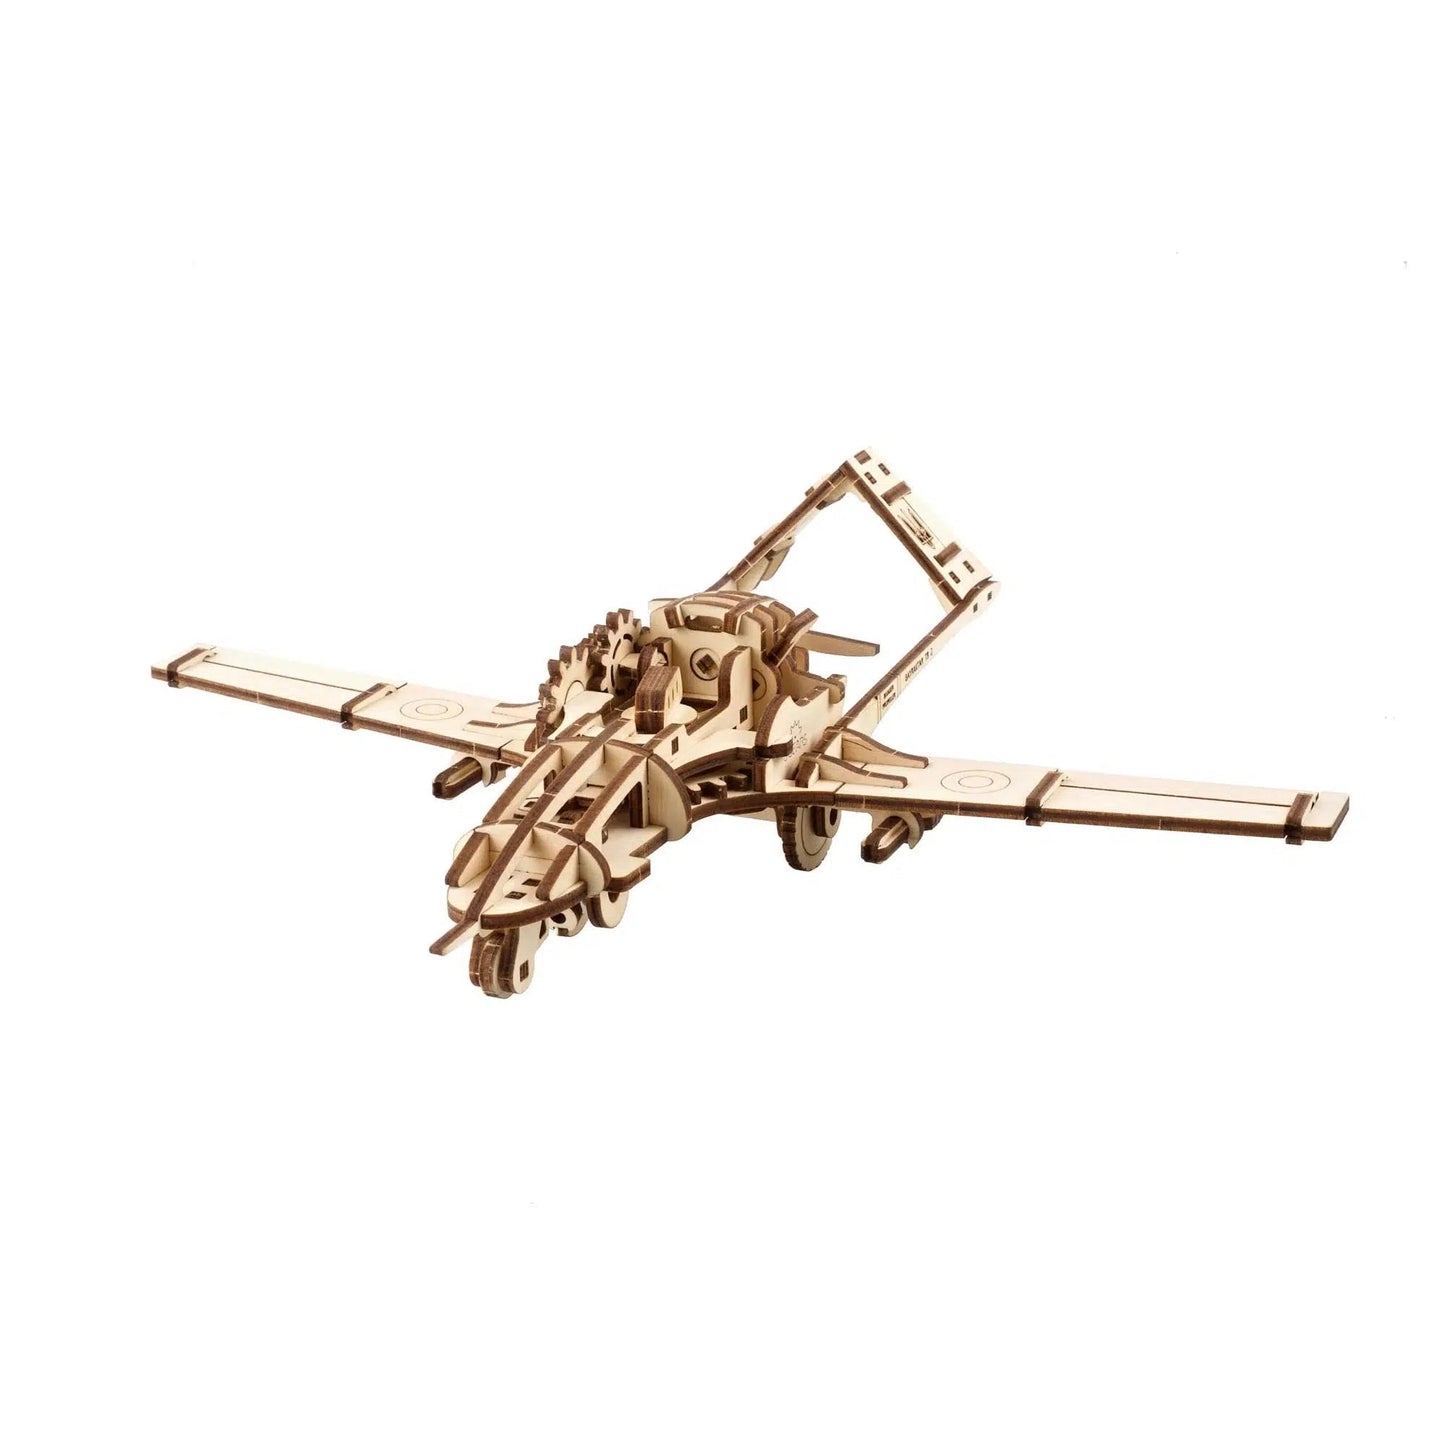 Bayraktar TB2 Combat Drone 3D Wood Model Kit UGEARS